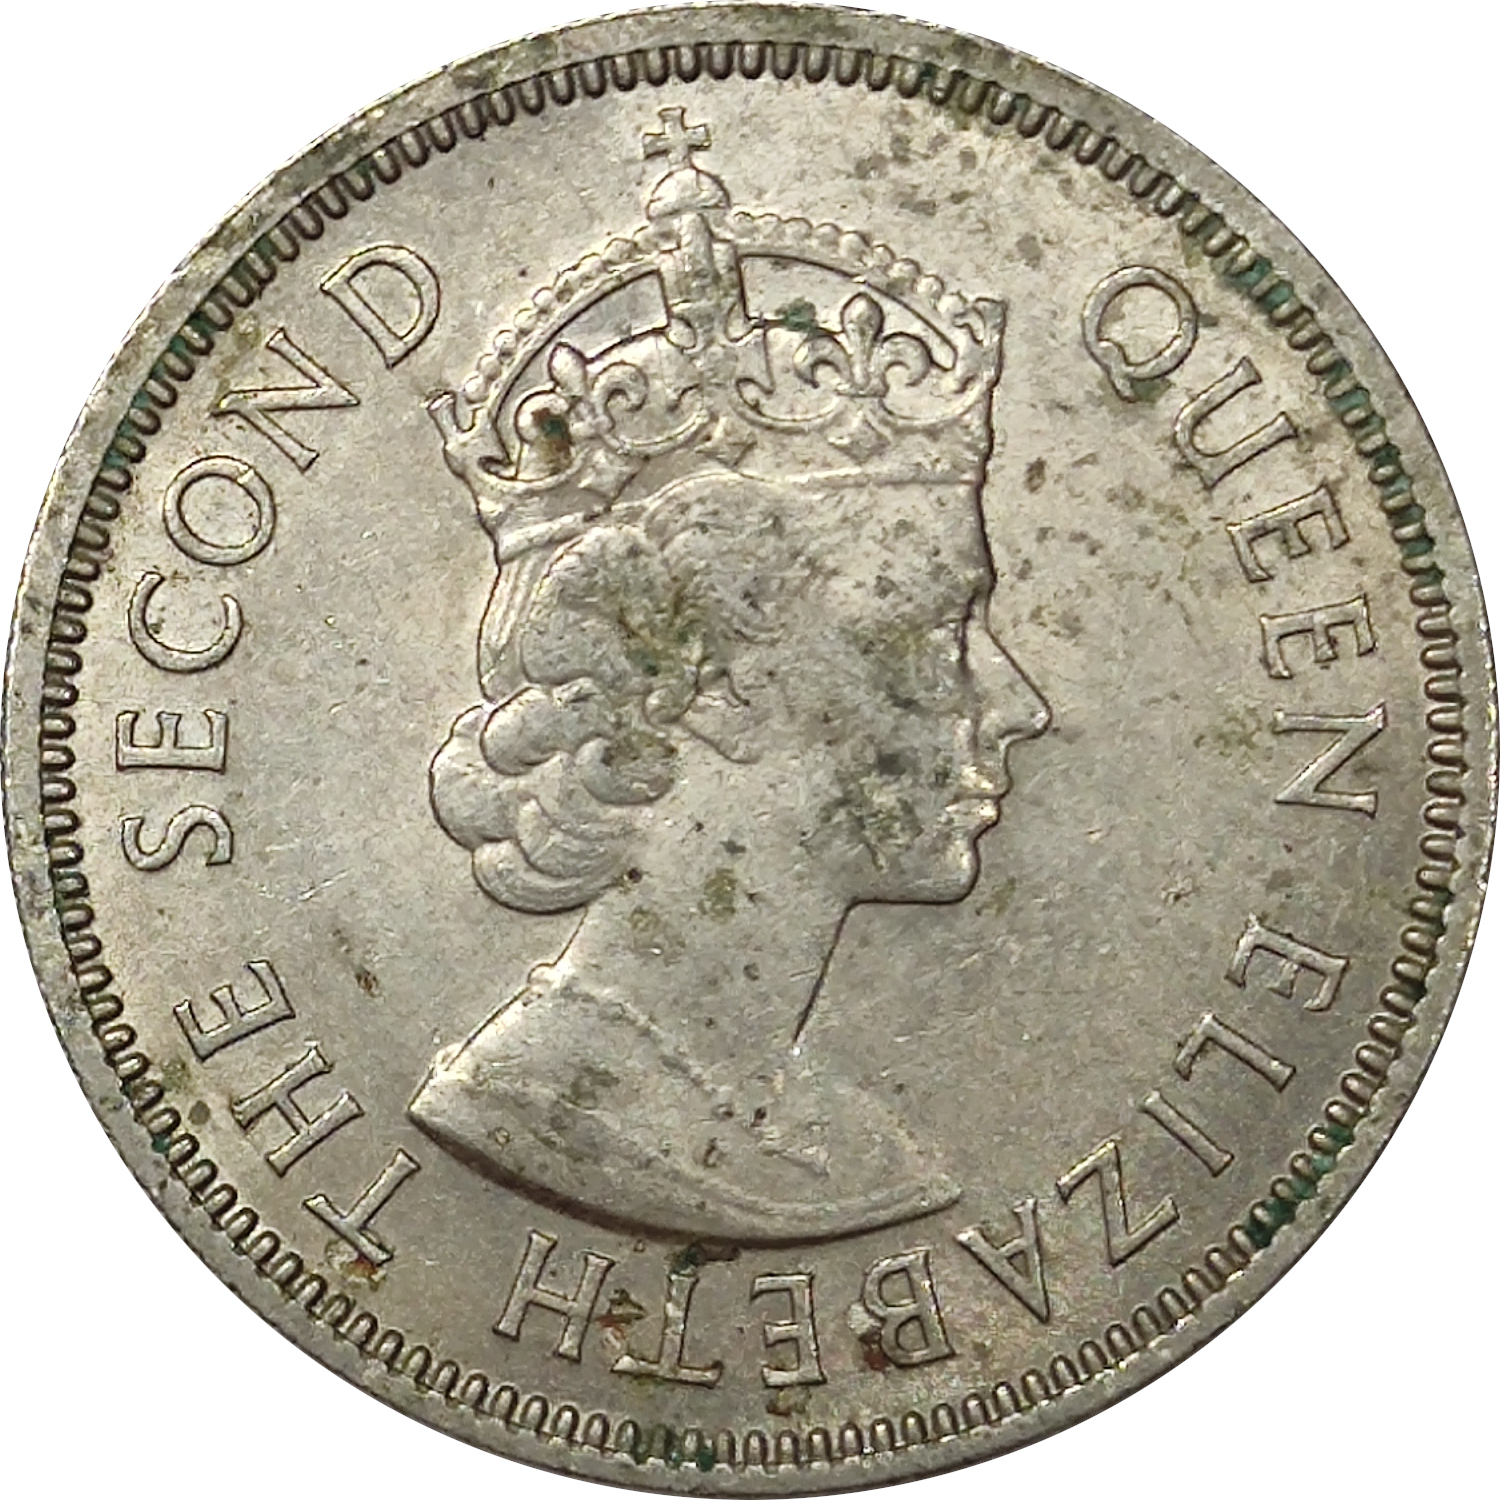 1/2 rupee - Elizabeth II